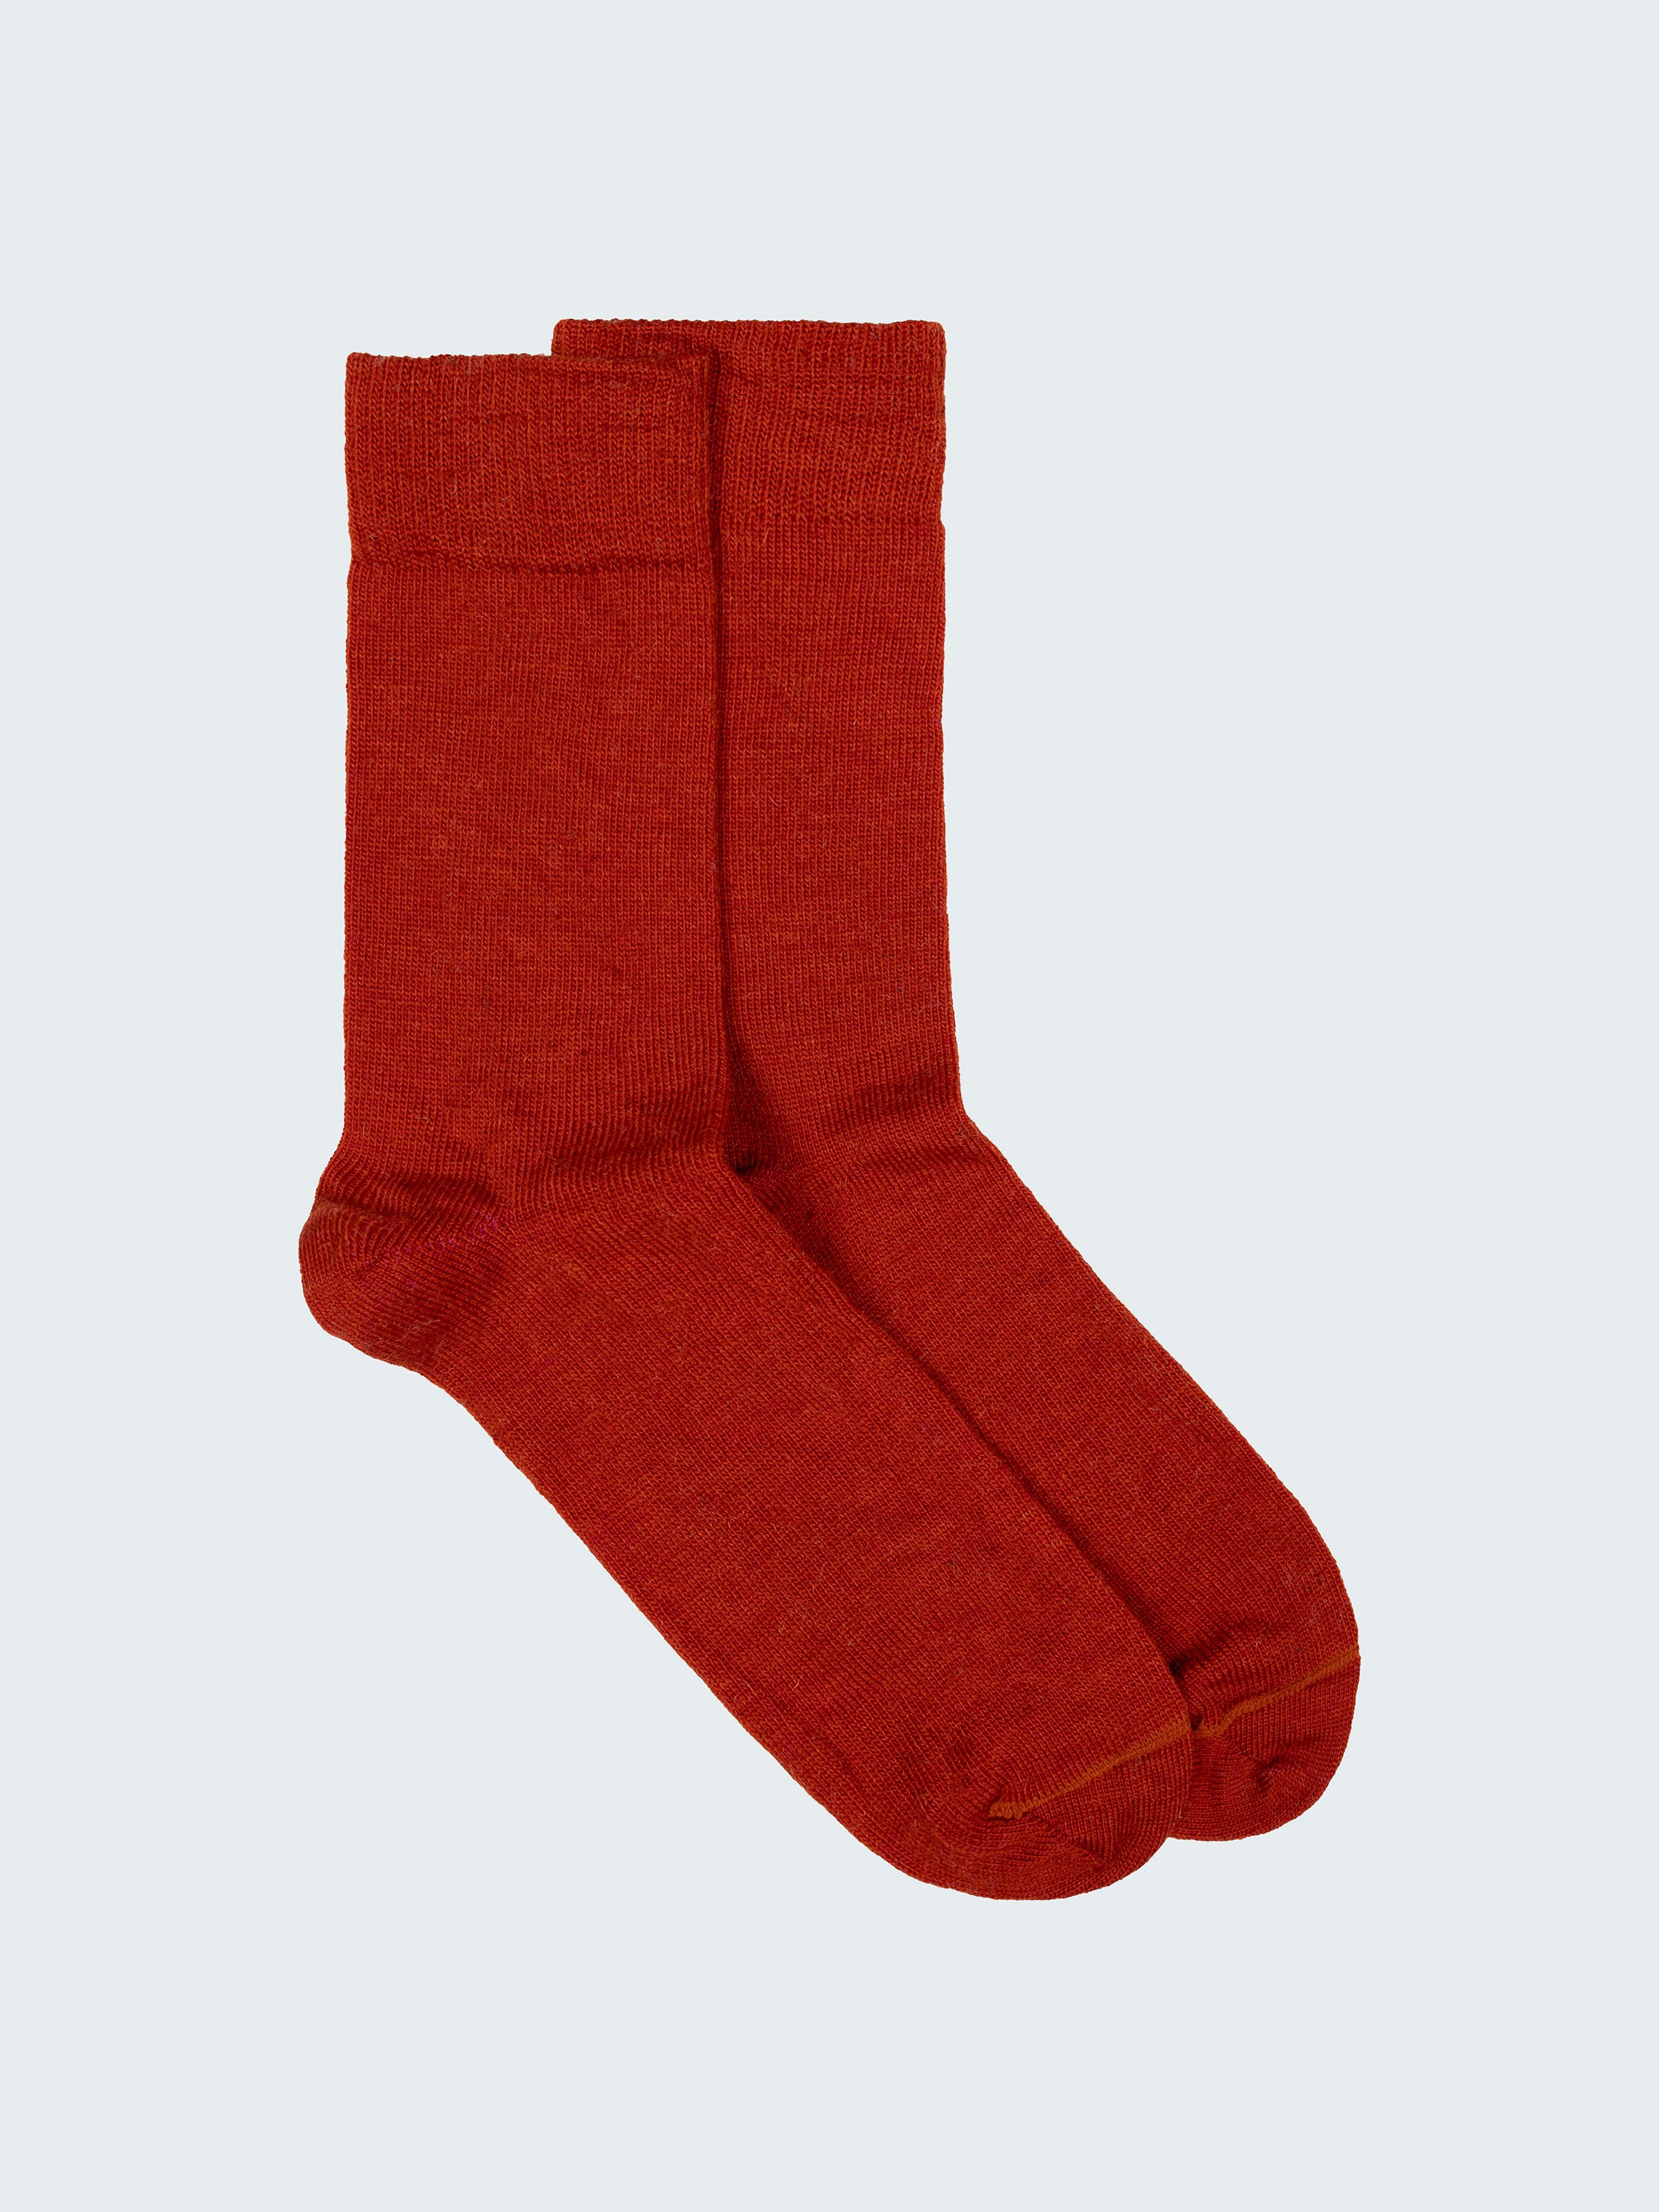 Socks Men's – The Real Wool Shop